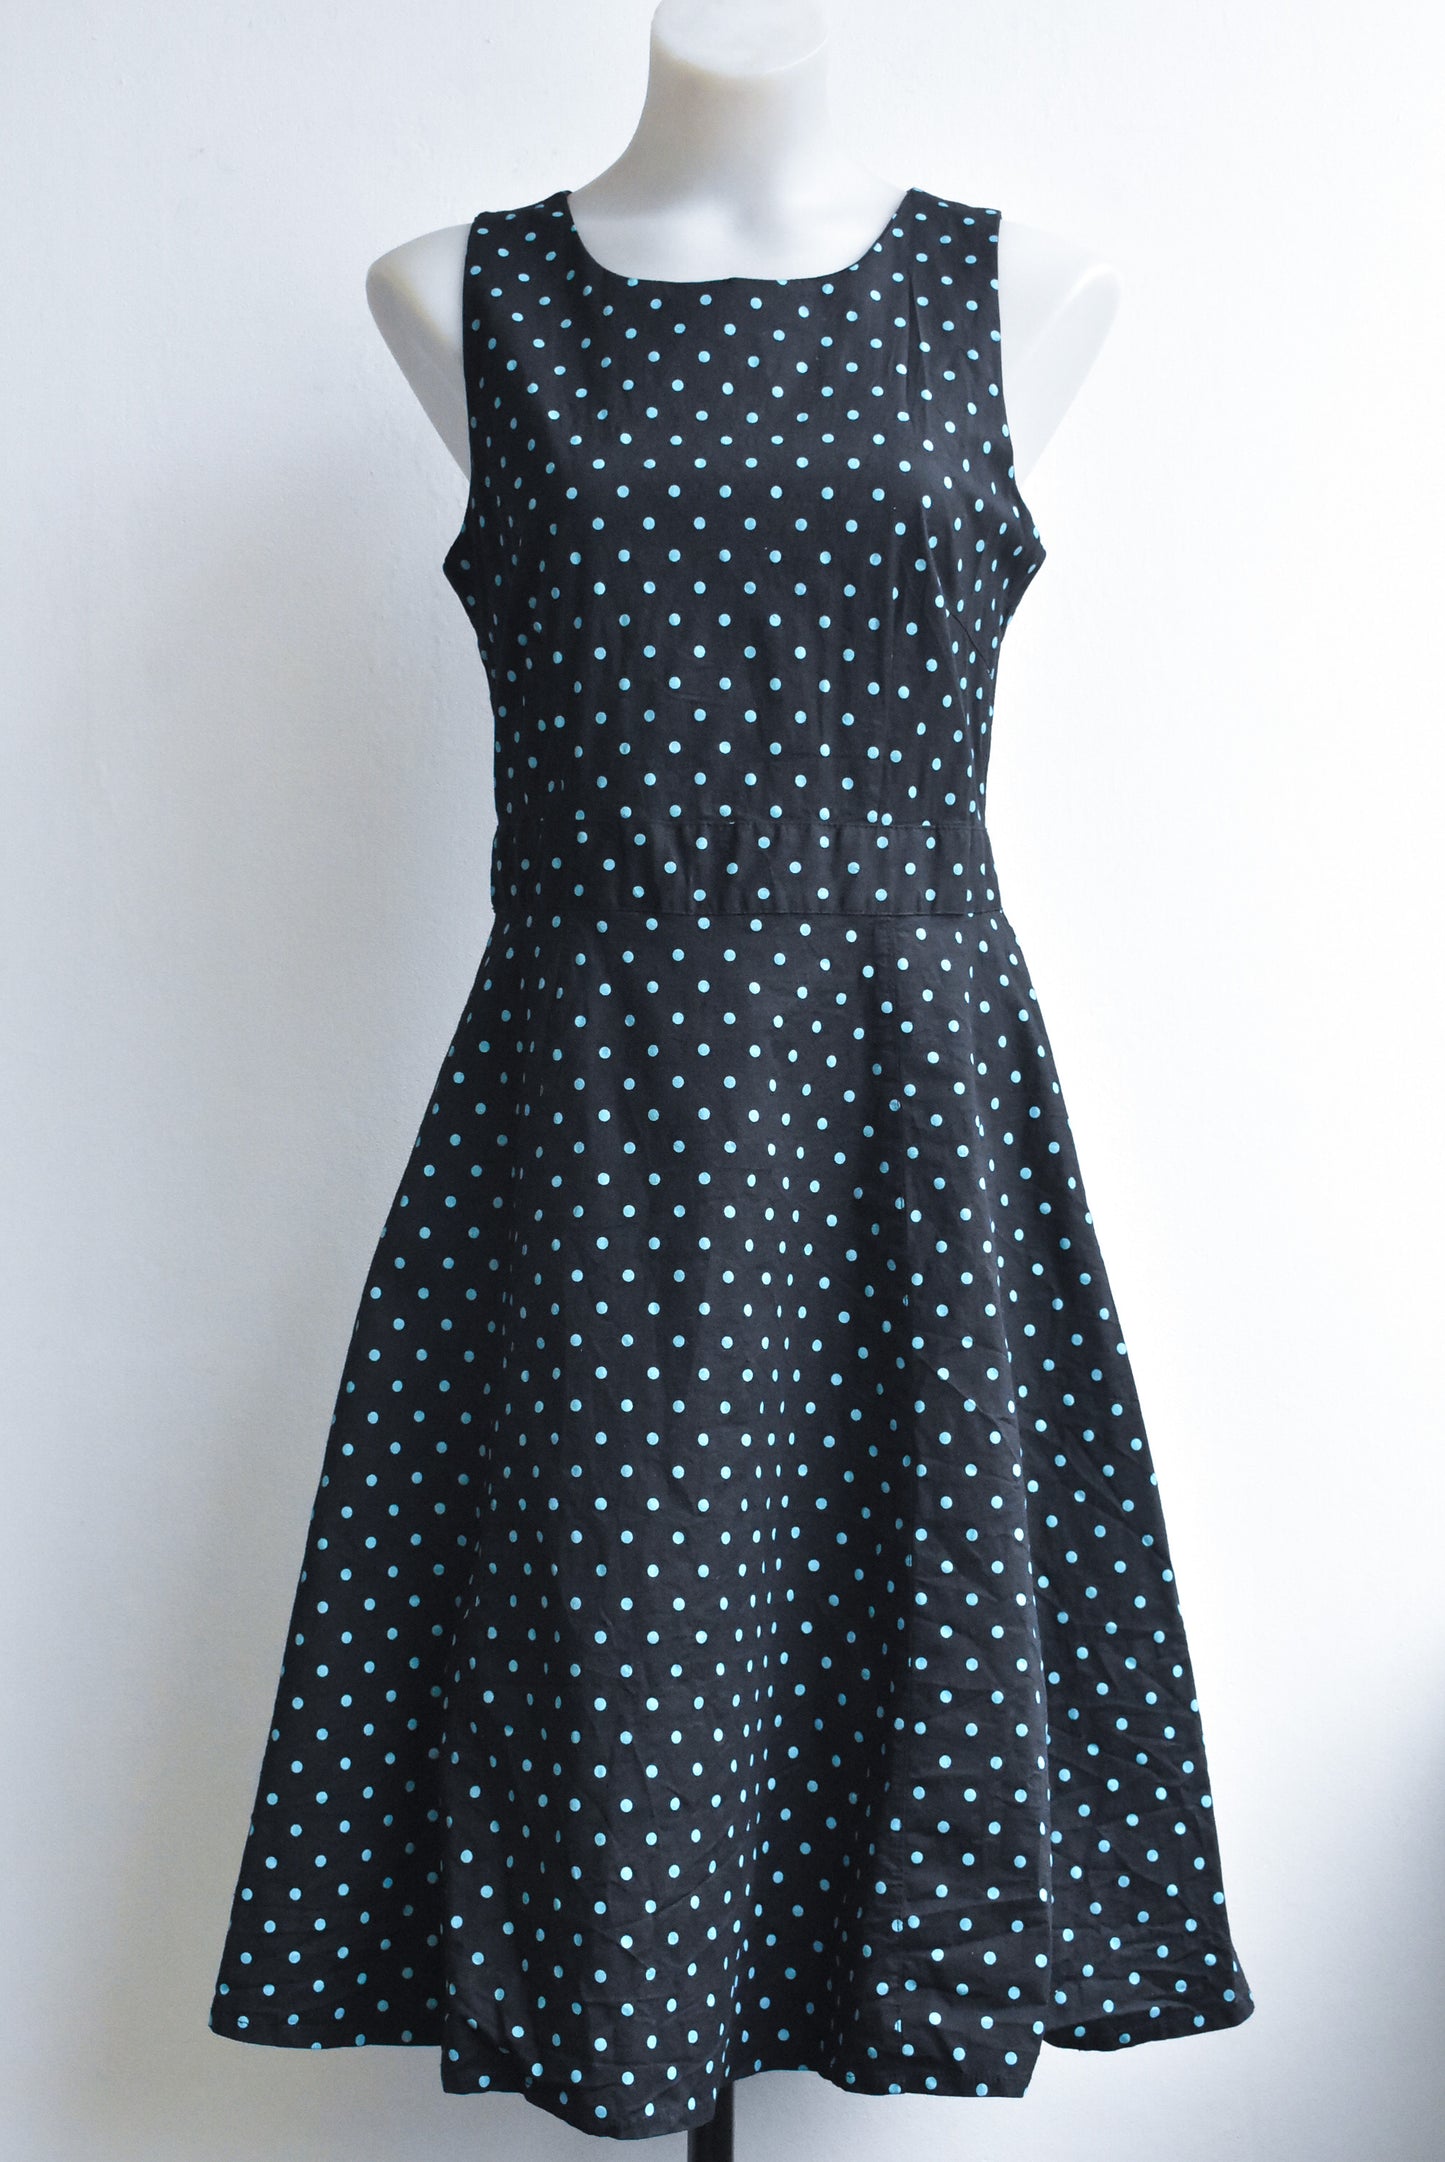 Hound Dog black blue polka dot dress, size 14